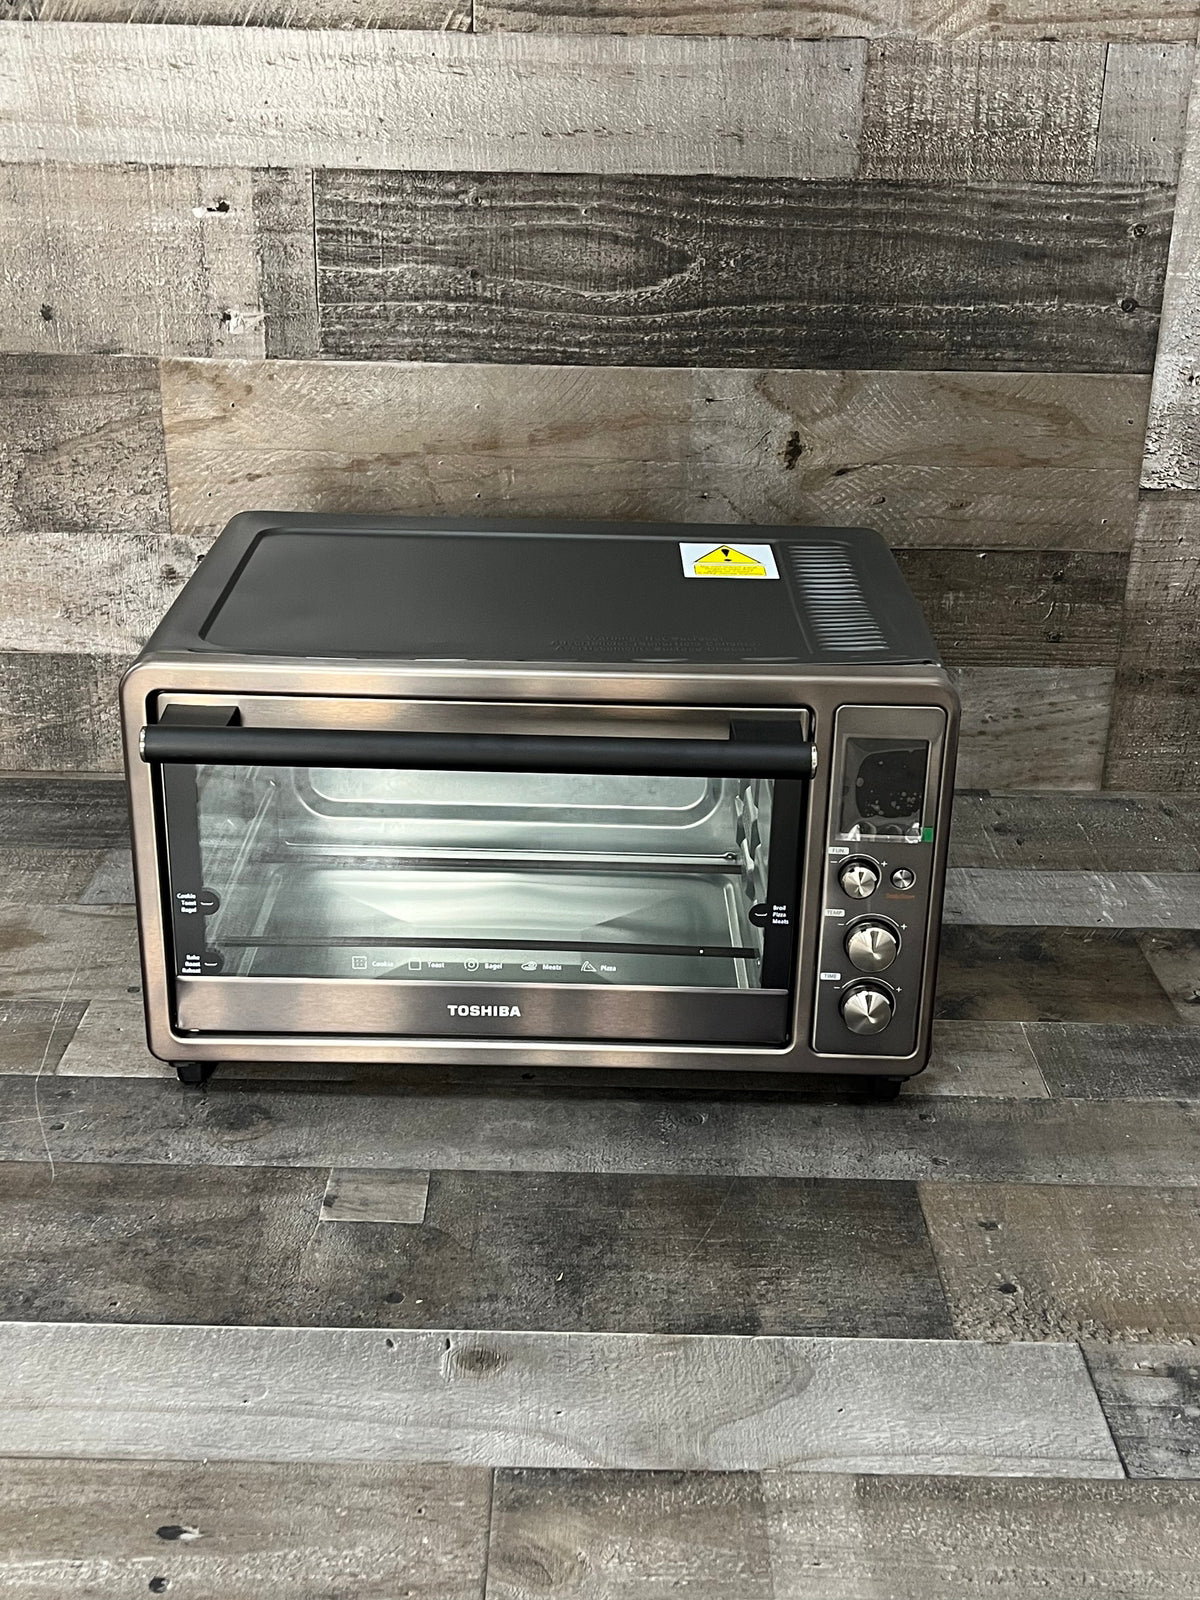 Toshiba Speedy Convection
Toaster Oven